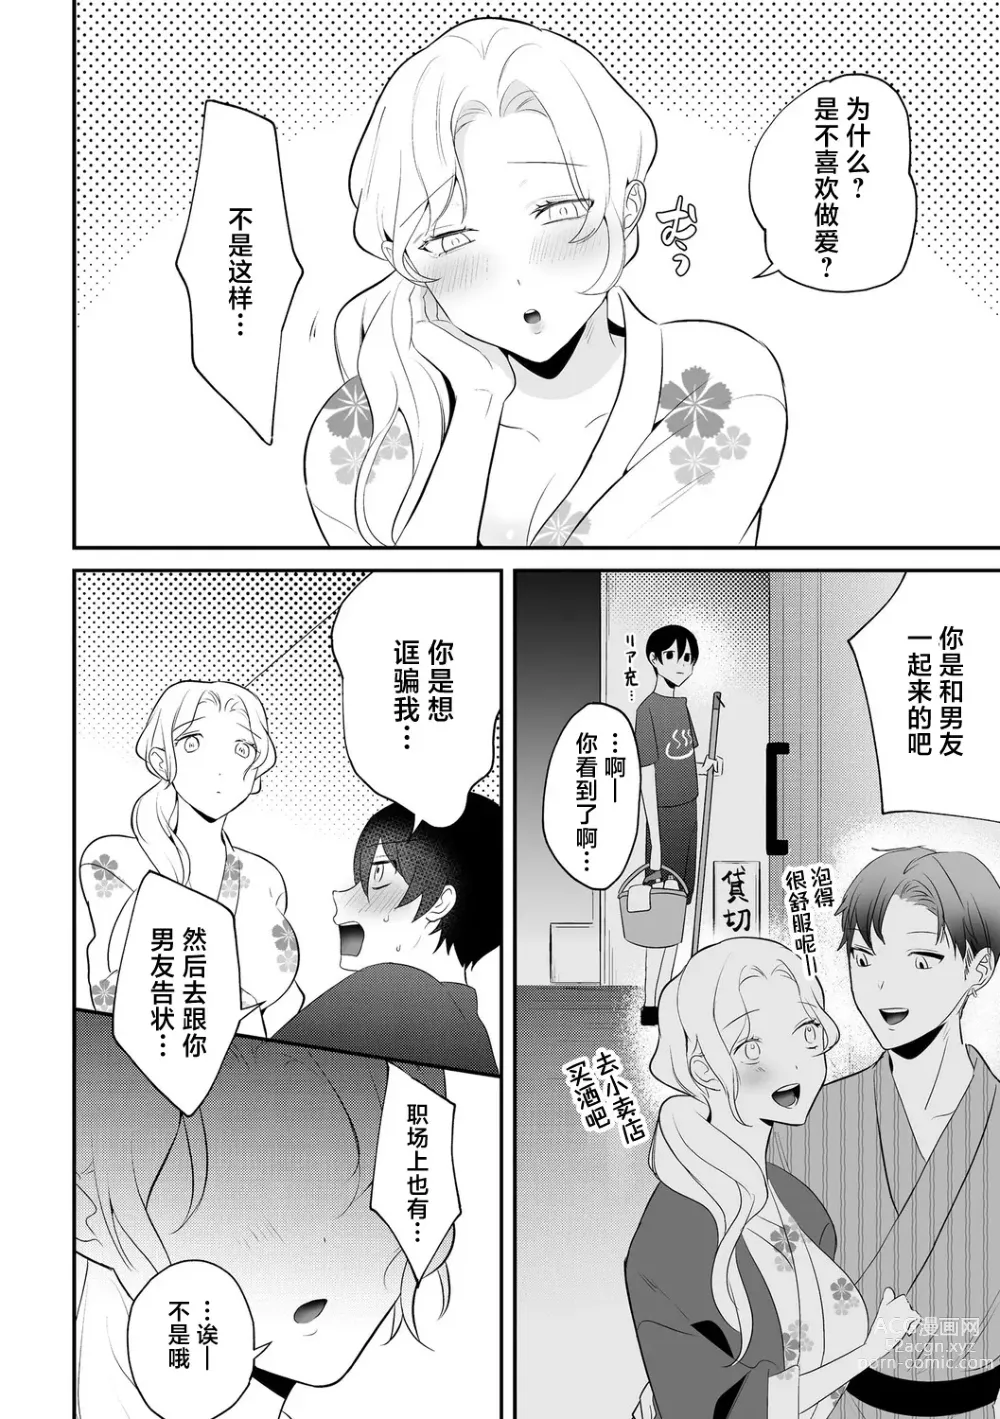 Page 4 of manga Netorare Onsen Arbeit